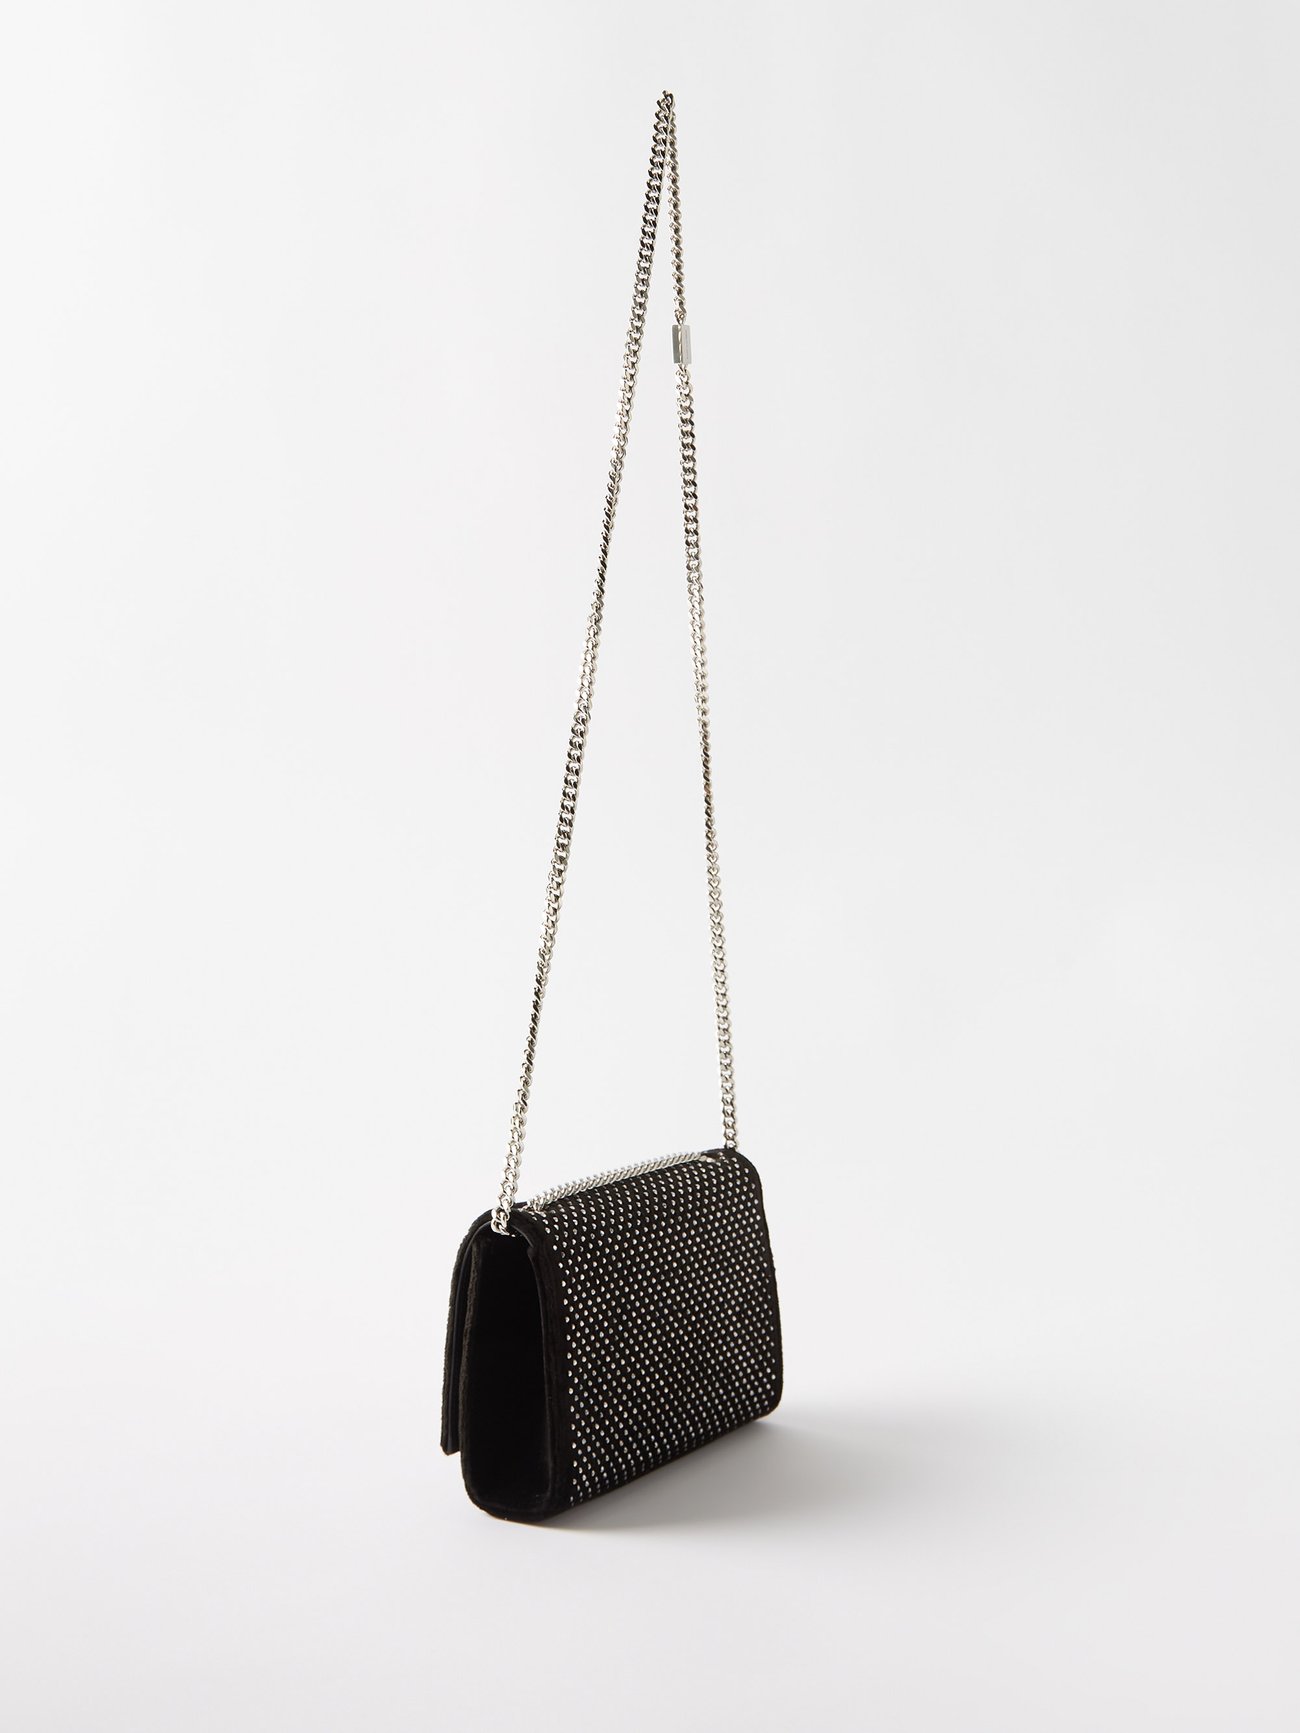 small rhinestone-embellished Kate chain bag, Saint Laurent